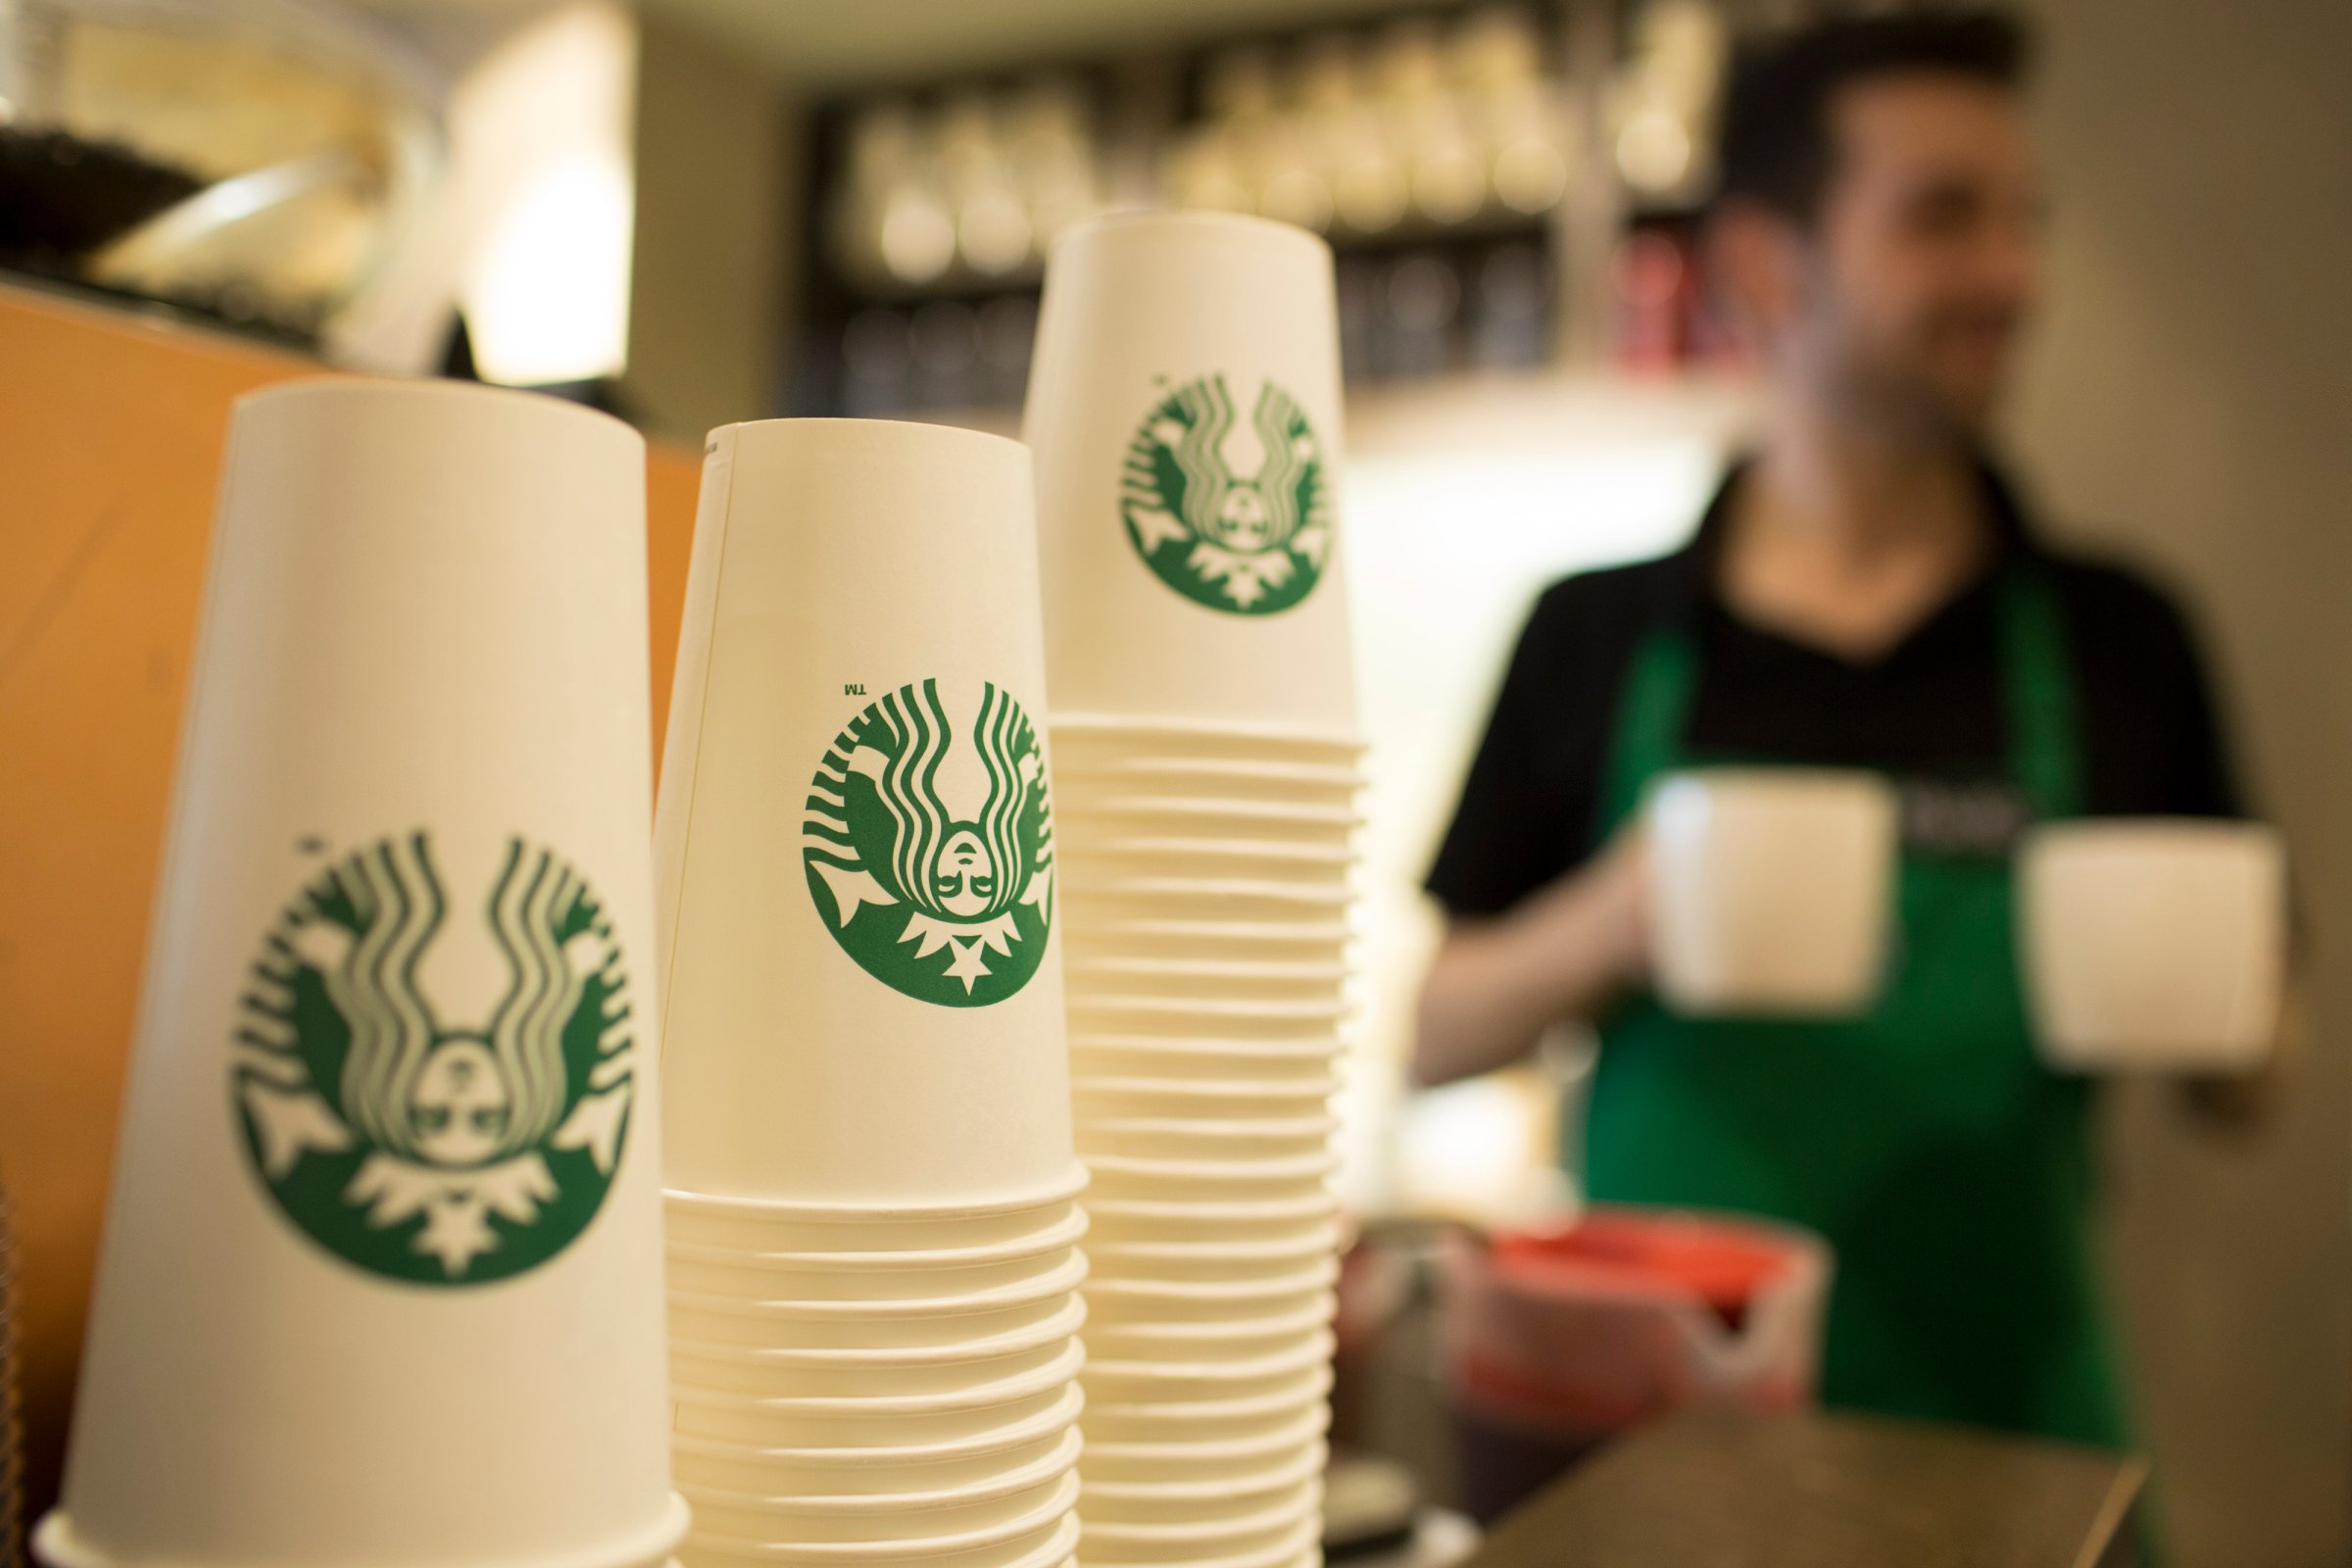 The Starbucks Corp. logo sits on cardboard coffee cups inside a Starbucks Corp. shop in London, U.K., on Monday, June 9, 2014.